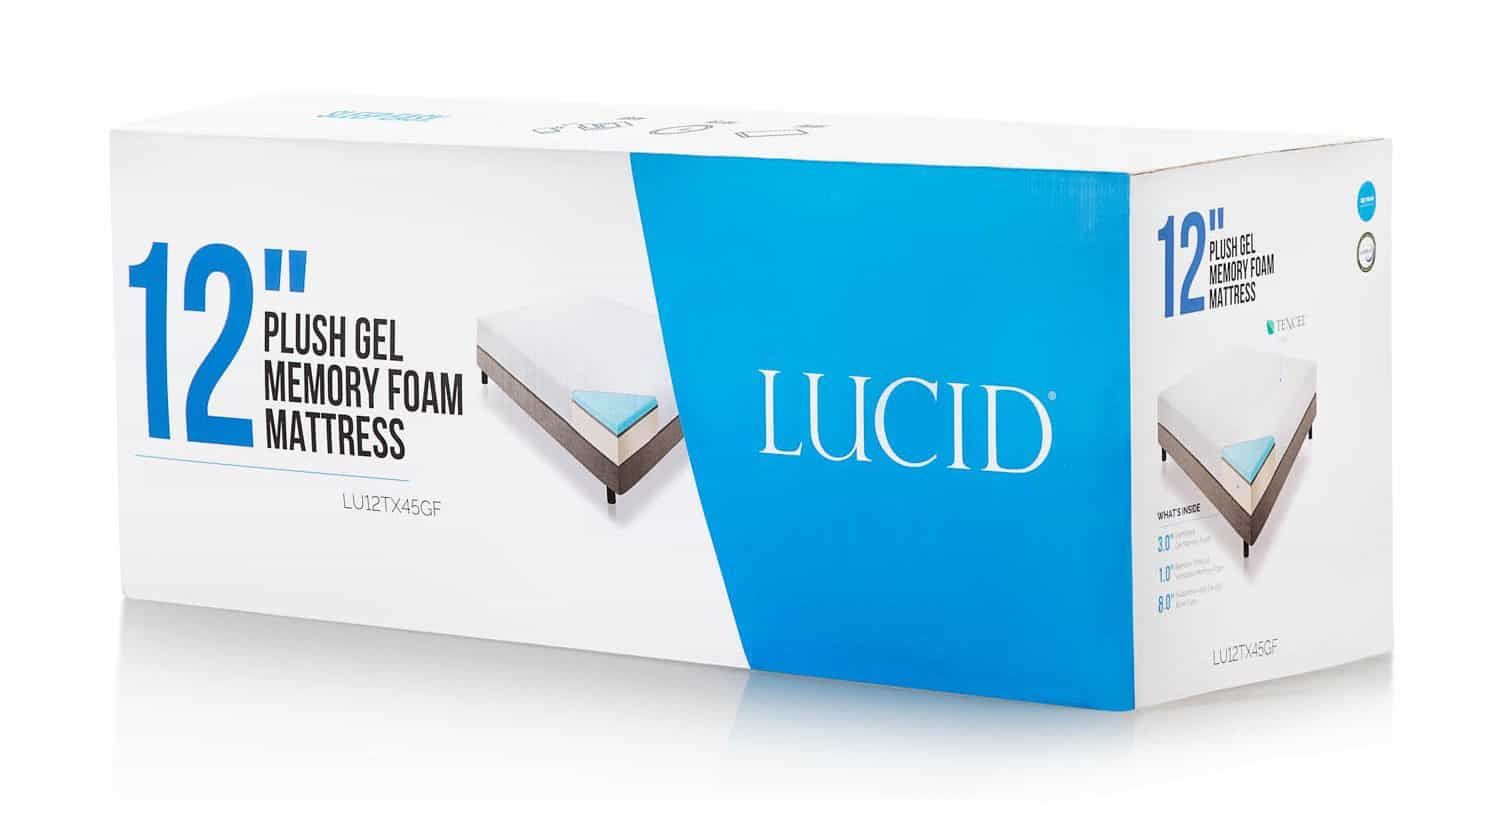 lucid 12 inch memory foam hybrid mattress